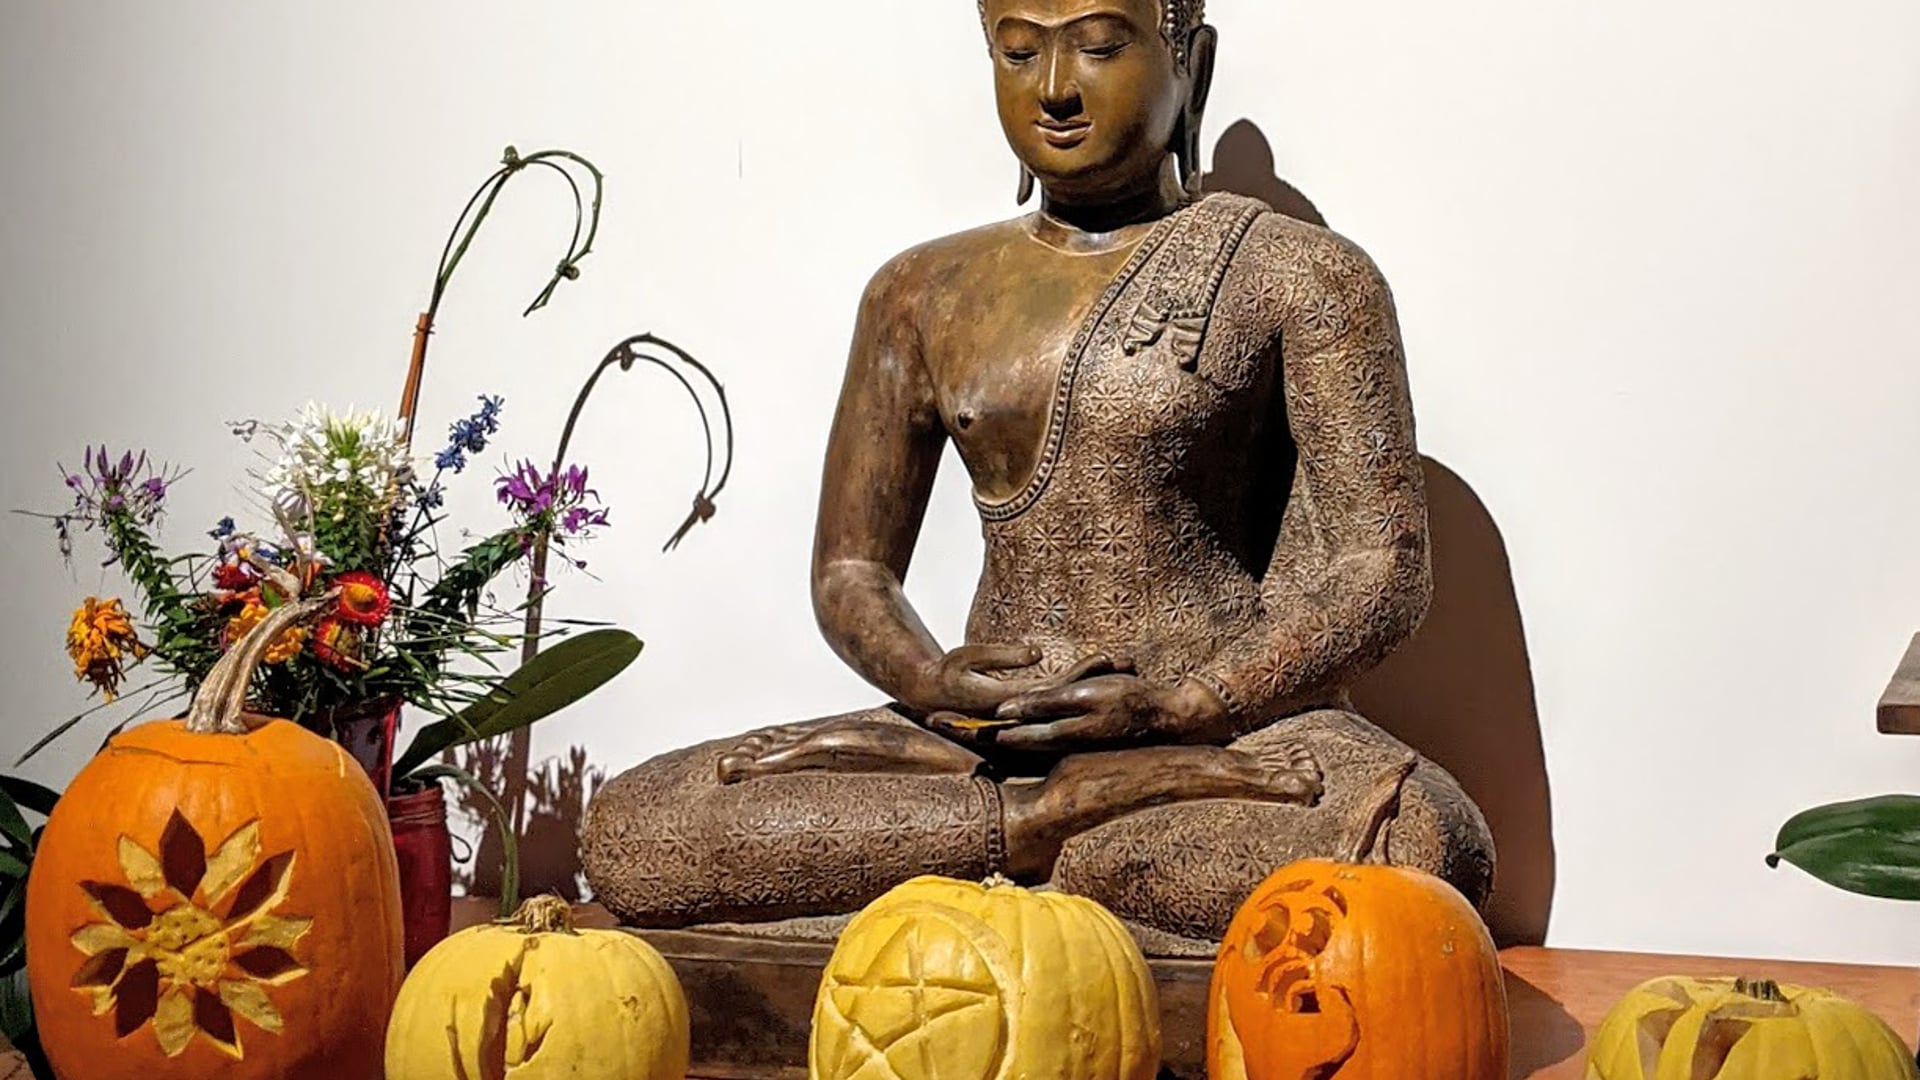 November 05: The Buddha & The Four Noble Truths